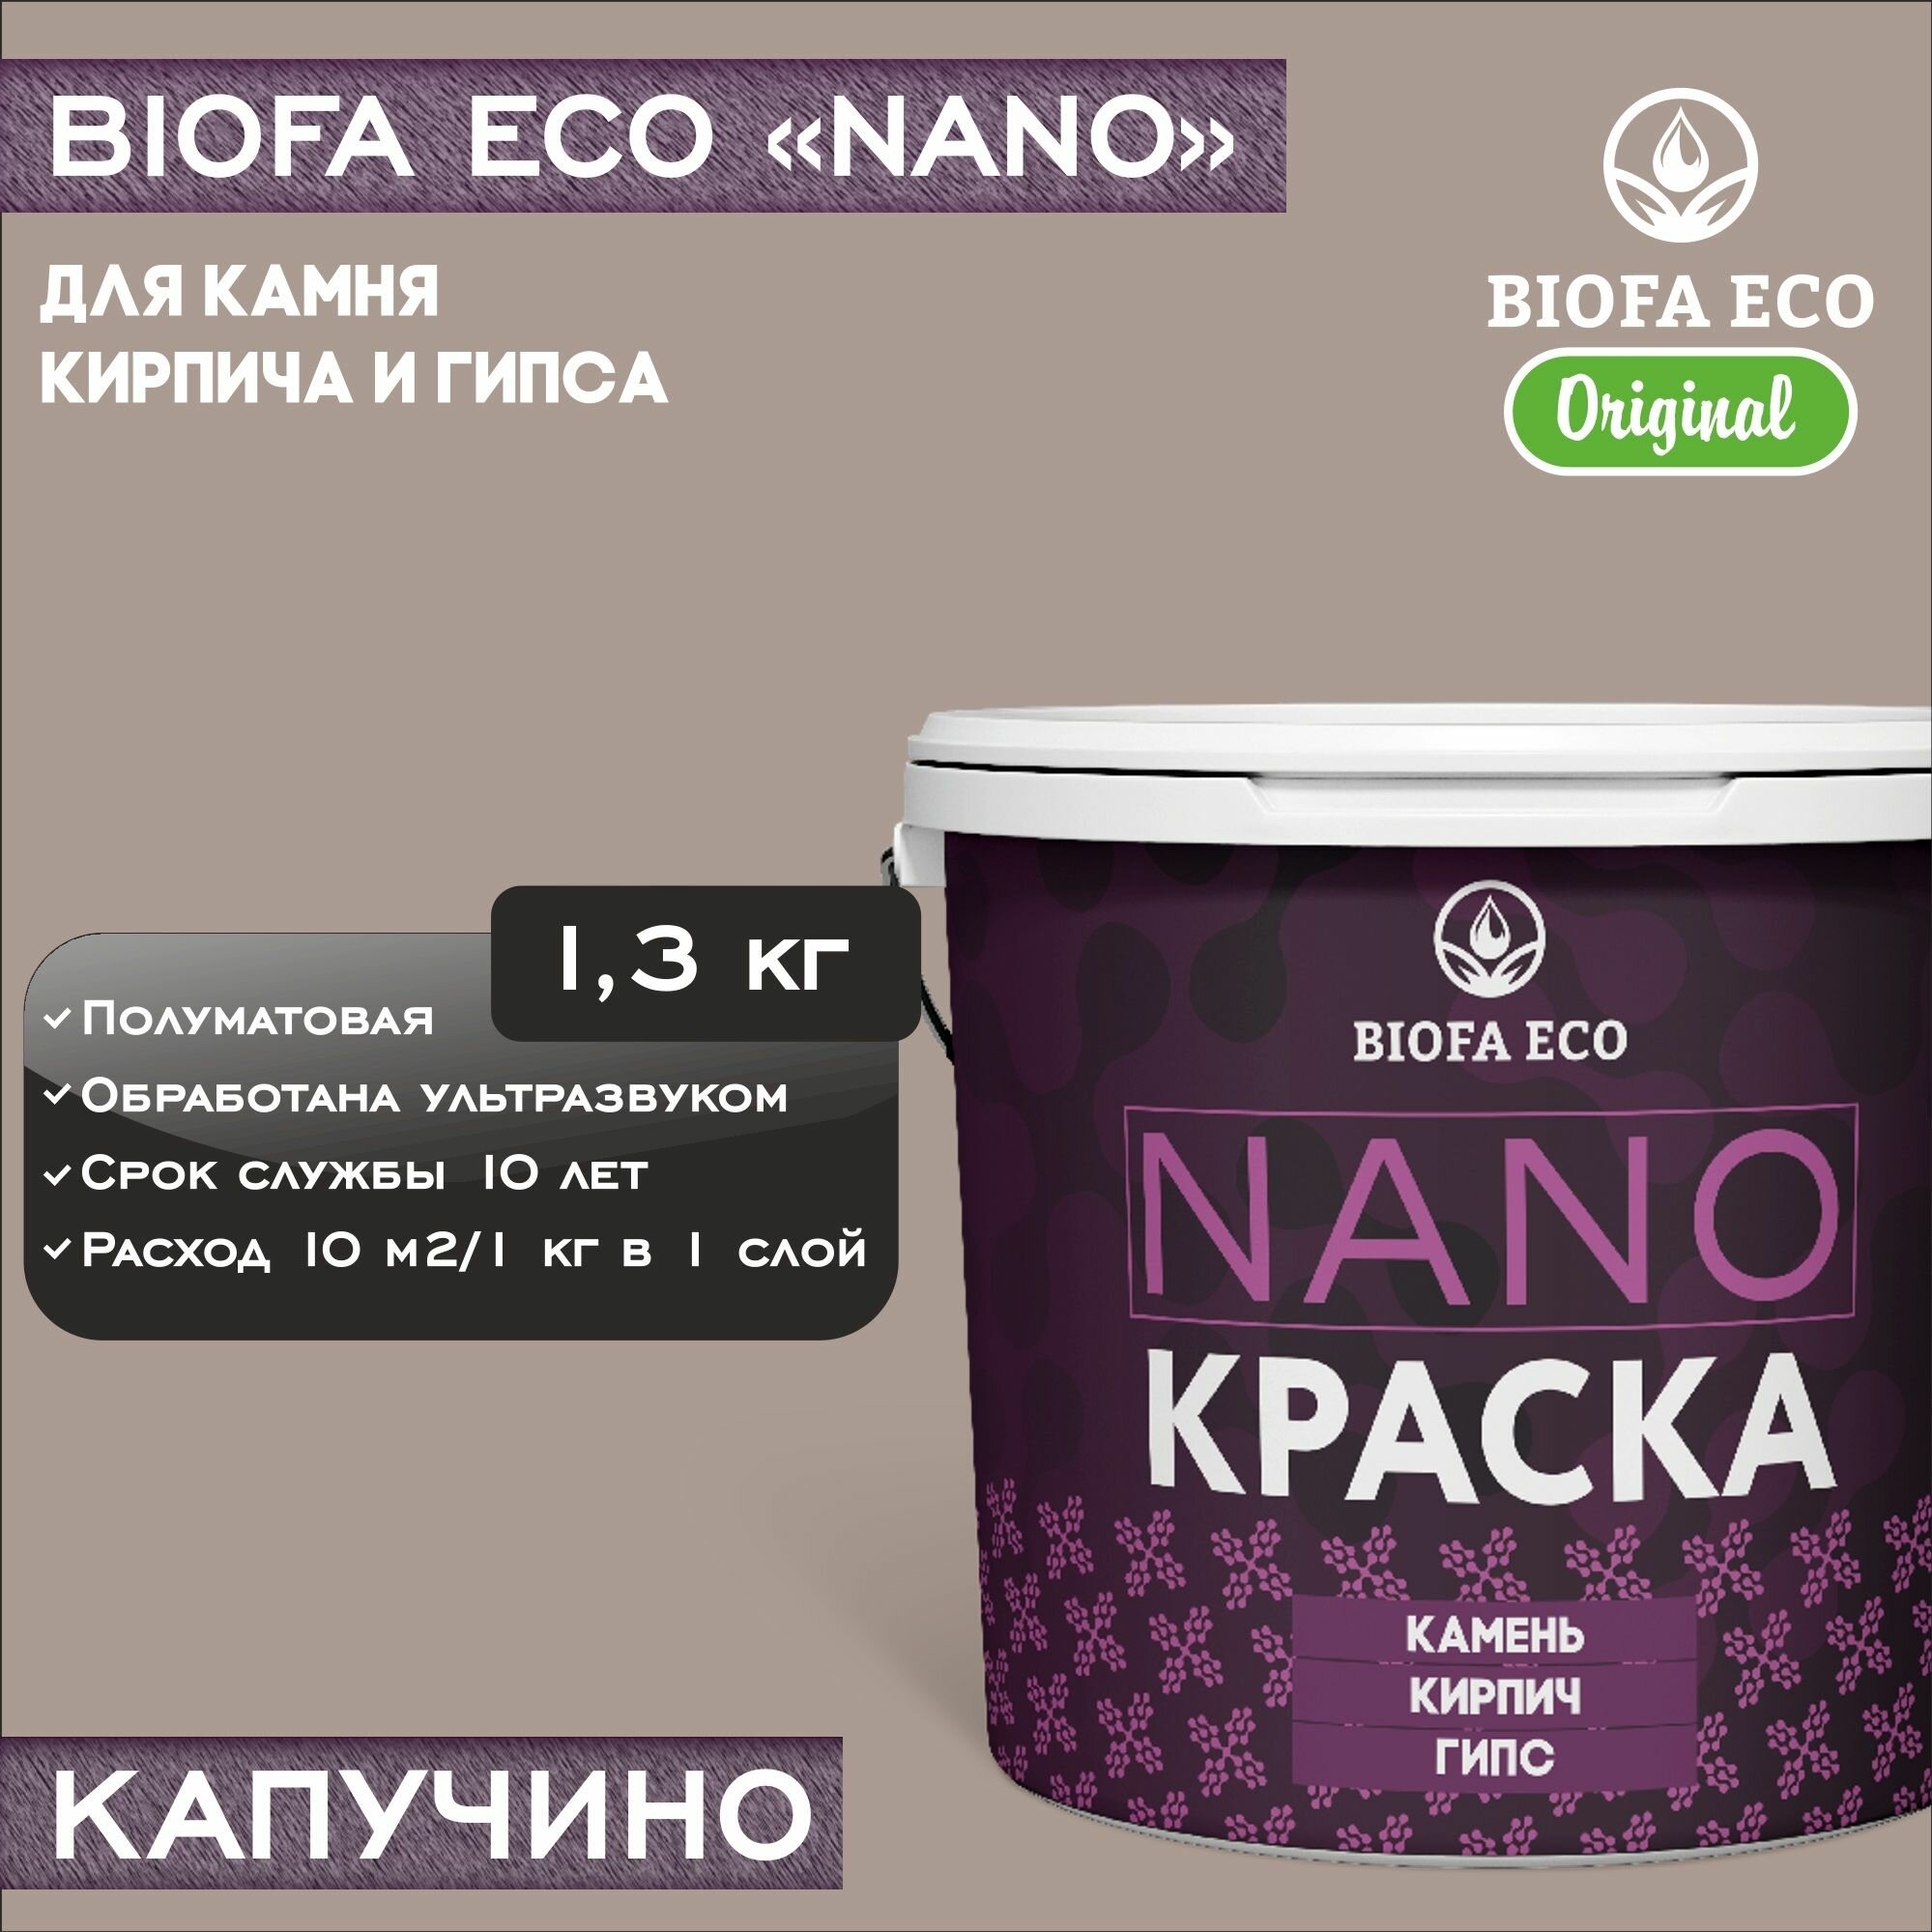 Краска BIOFA ECO NANO для камня, кирпича и гипса, адгезионная, полуматовая, цвет капучино, 1,3 кг